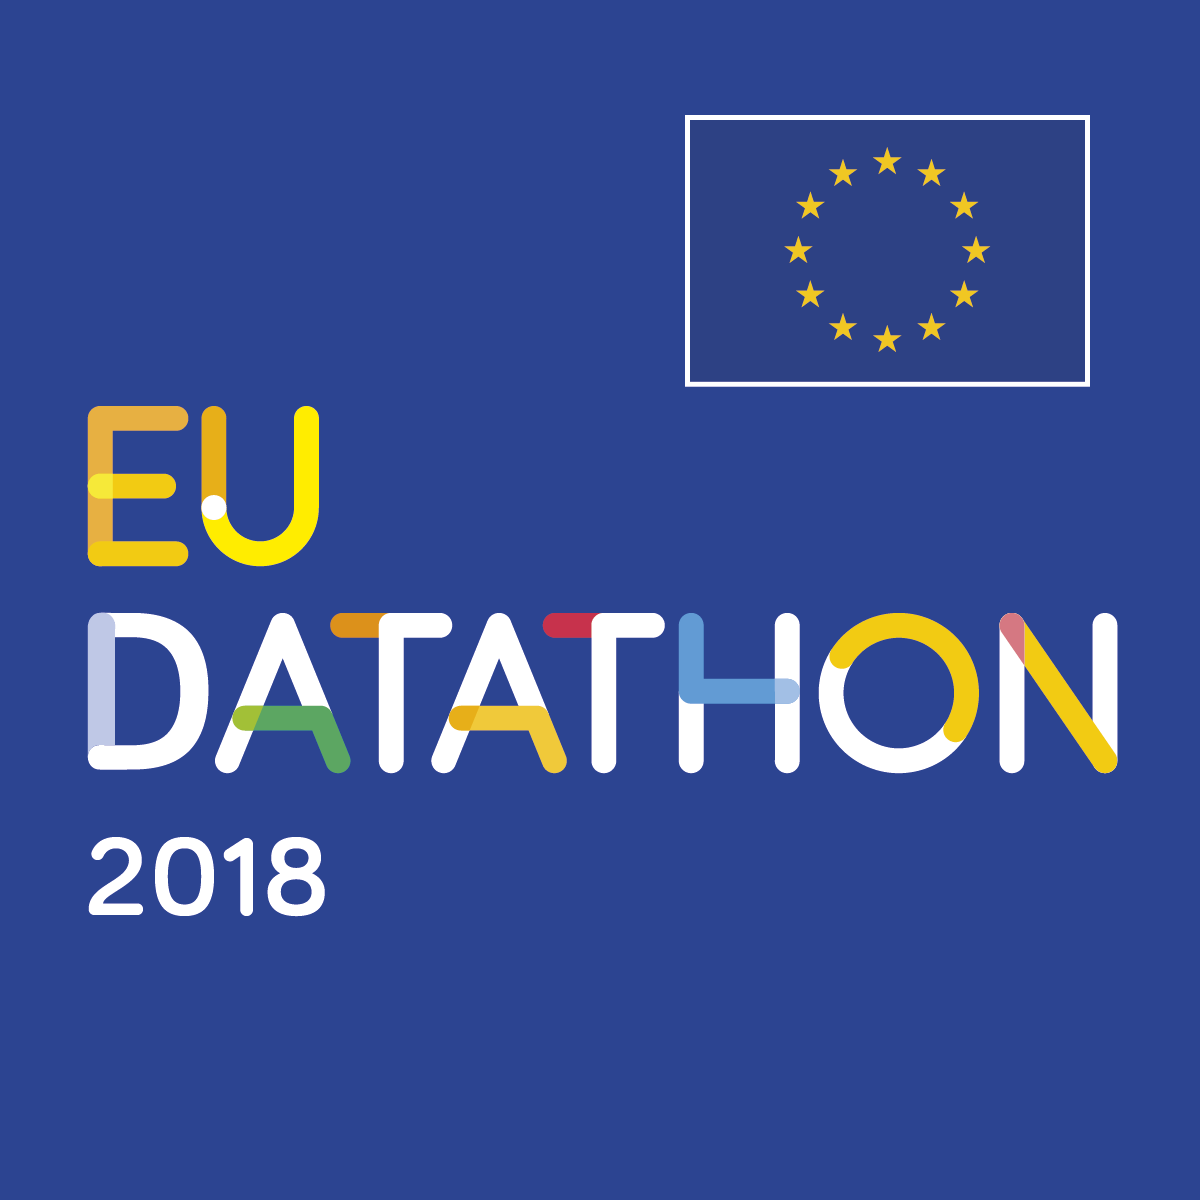 EU Datathon 2018 squared image